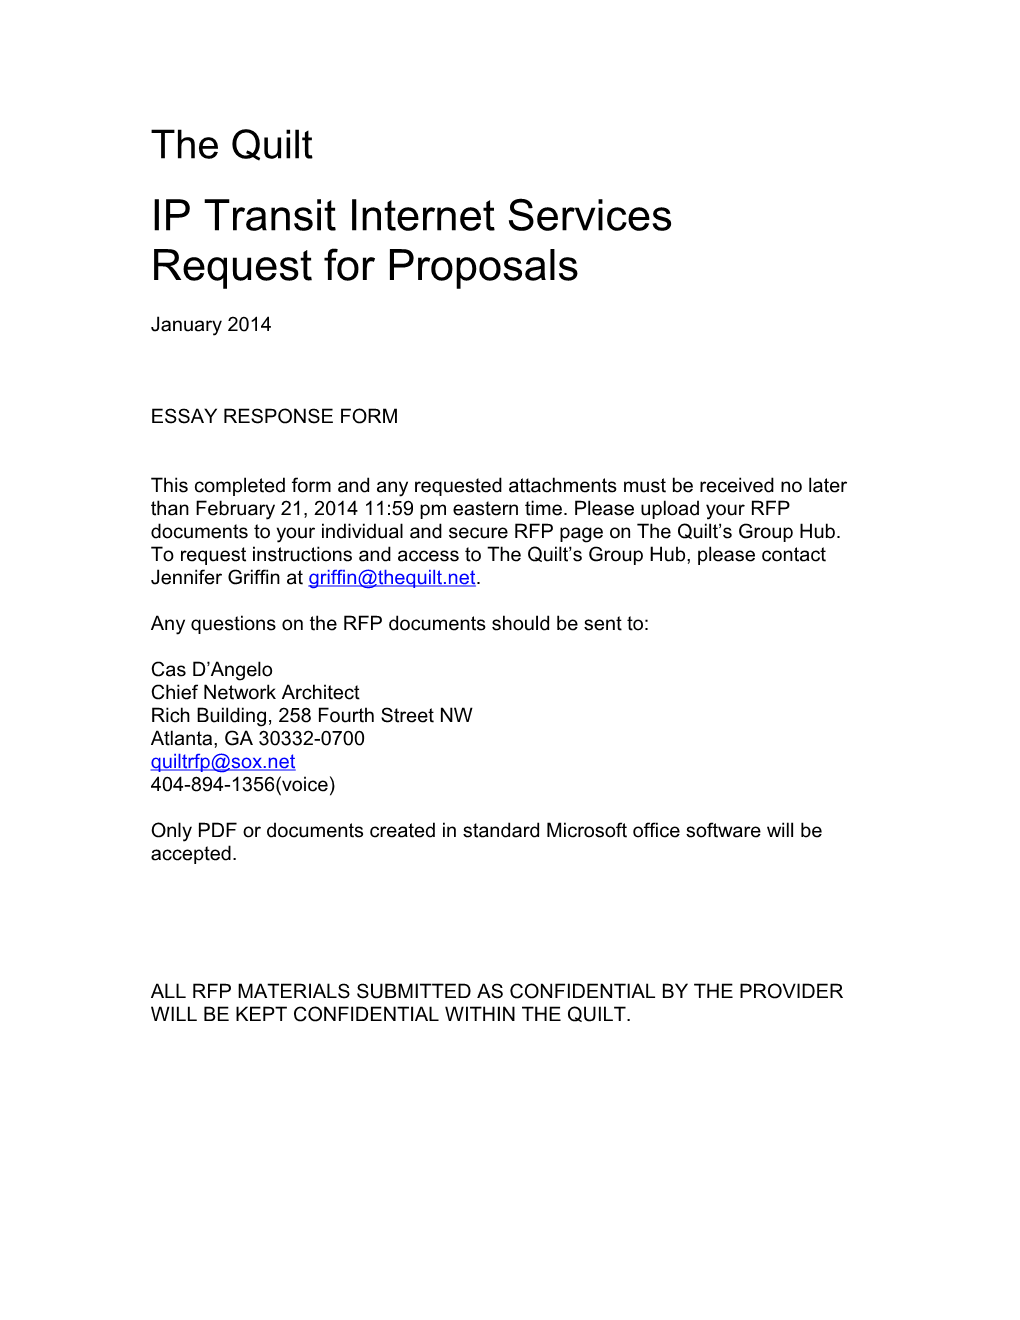 IP Transit Internet Services